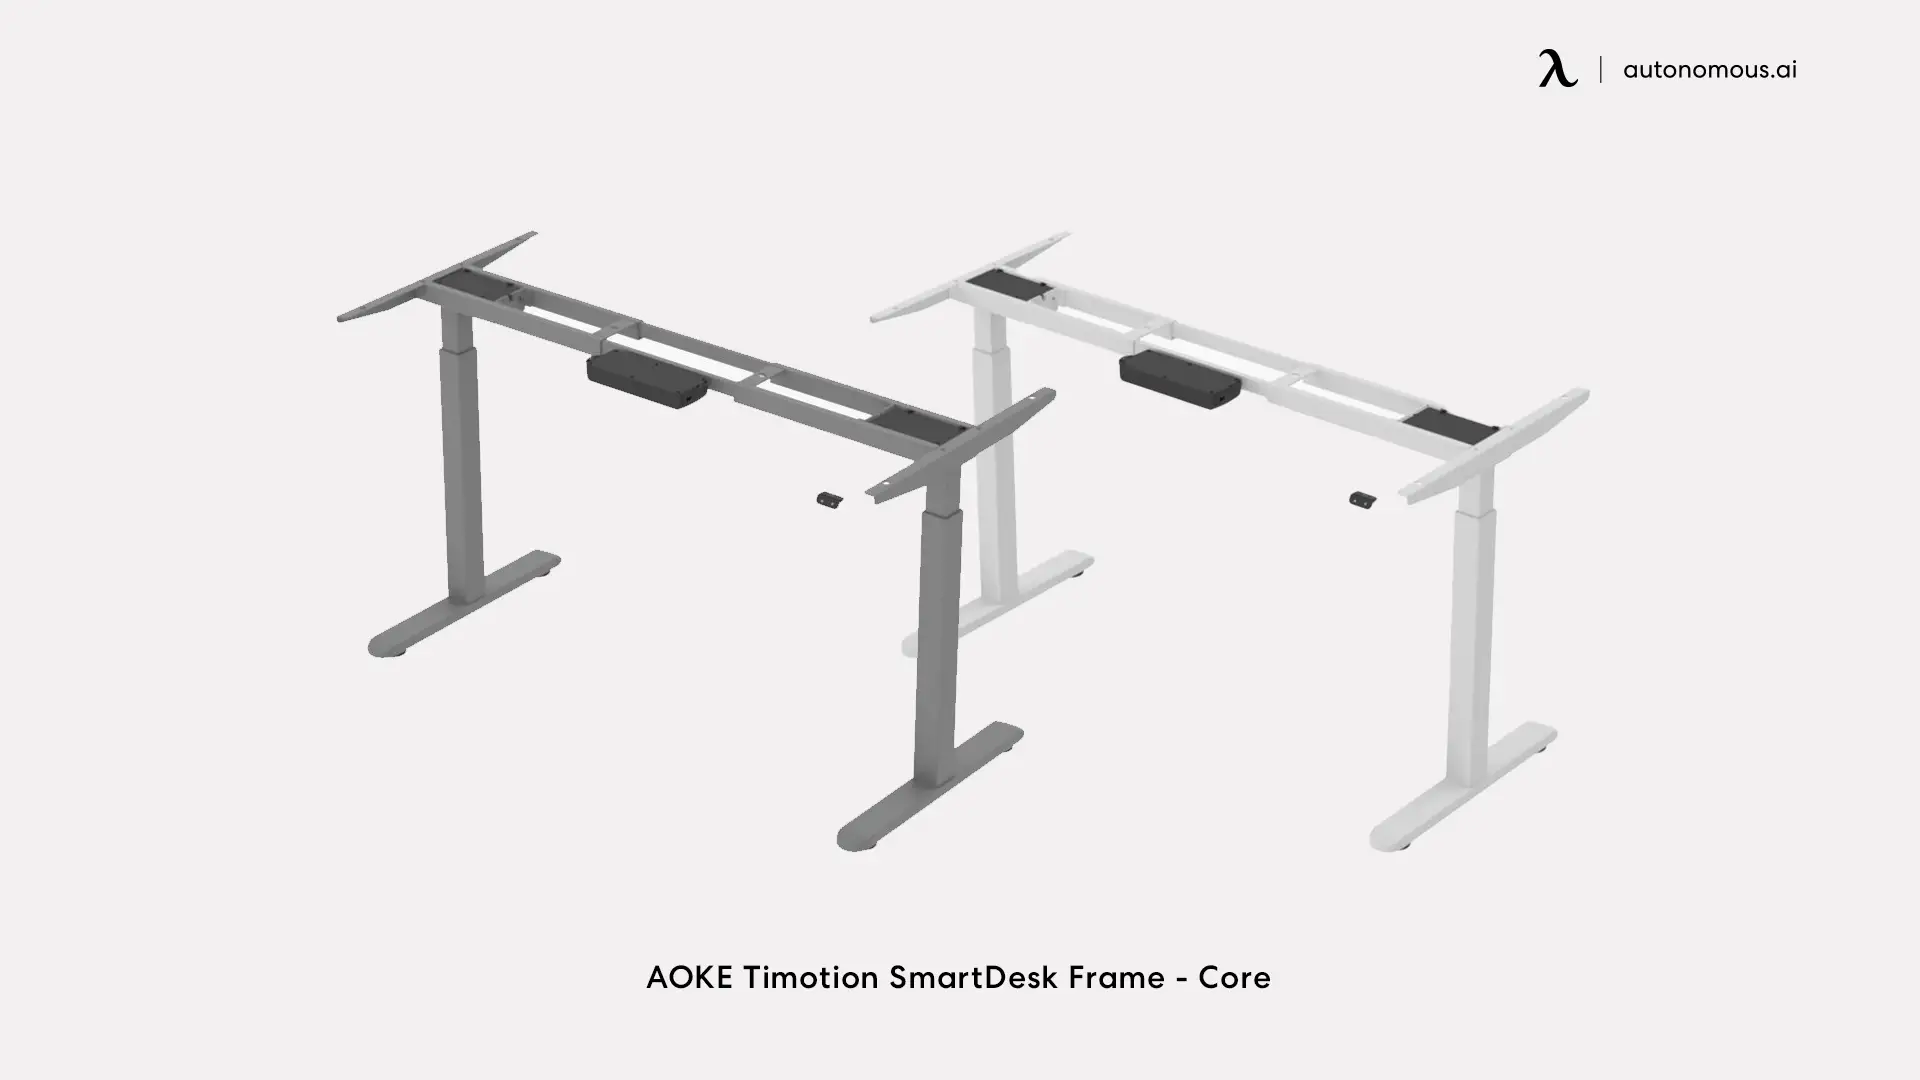 Aoke SmartDesk Frame Core by Timotion